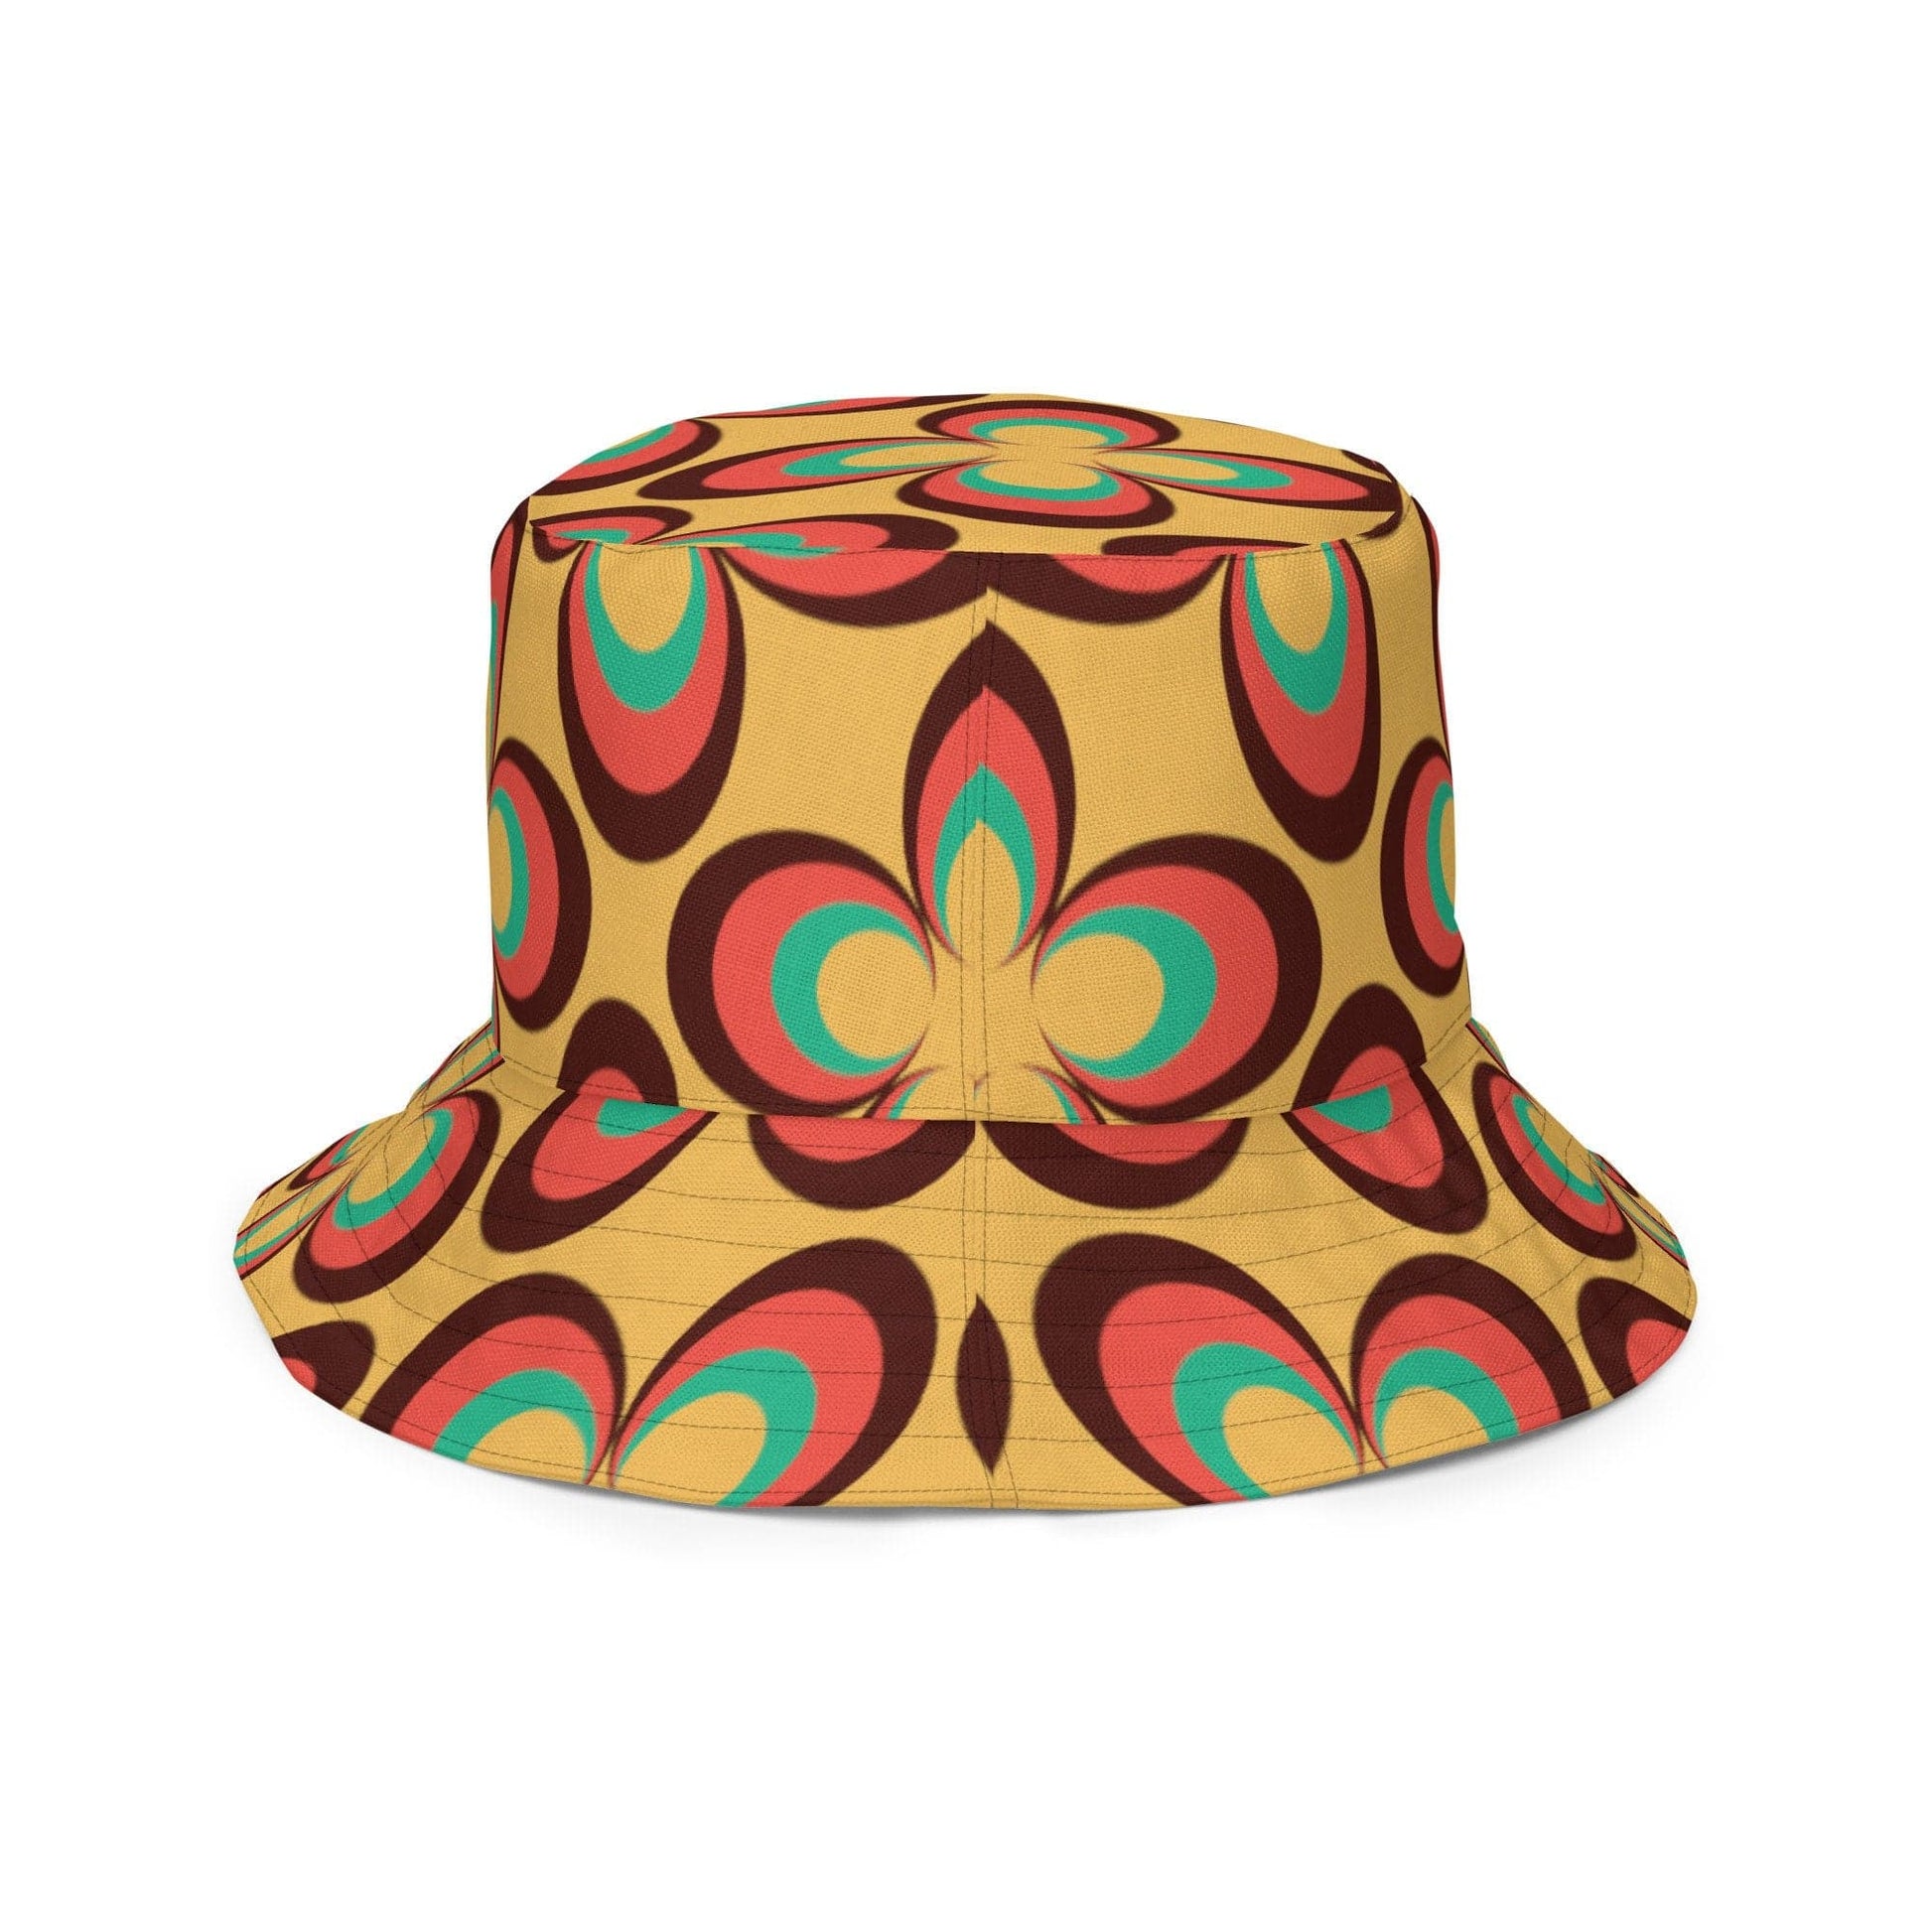 70s Retro Vintage Floral Reversible Bucket Hat, Mid Century Modern Daisy Women's Summer Panama Bucket Hat L/XL